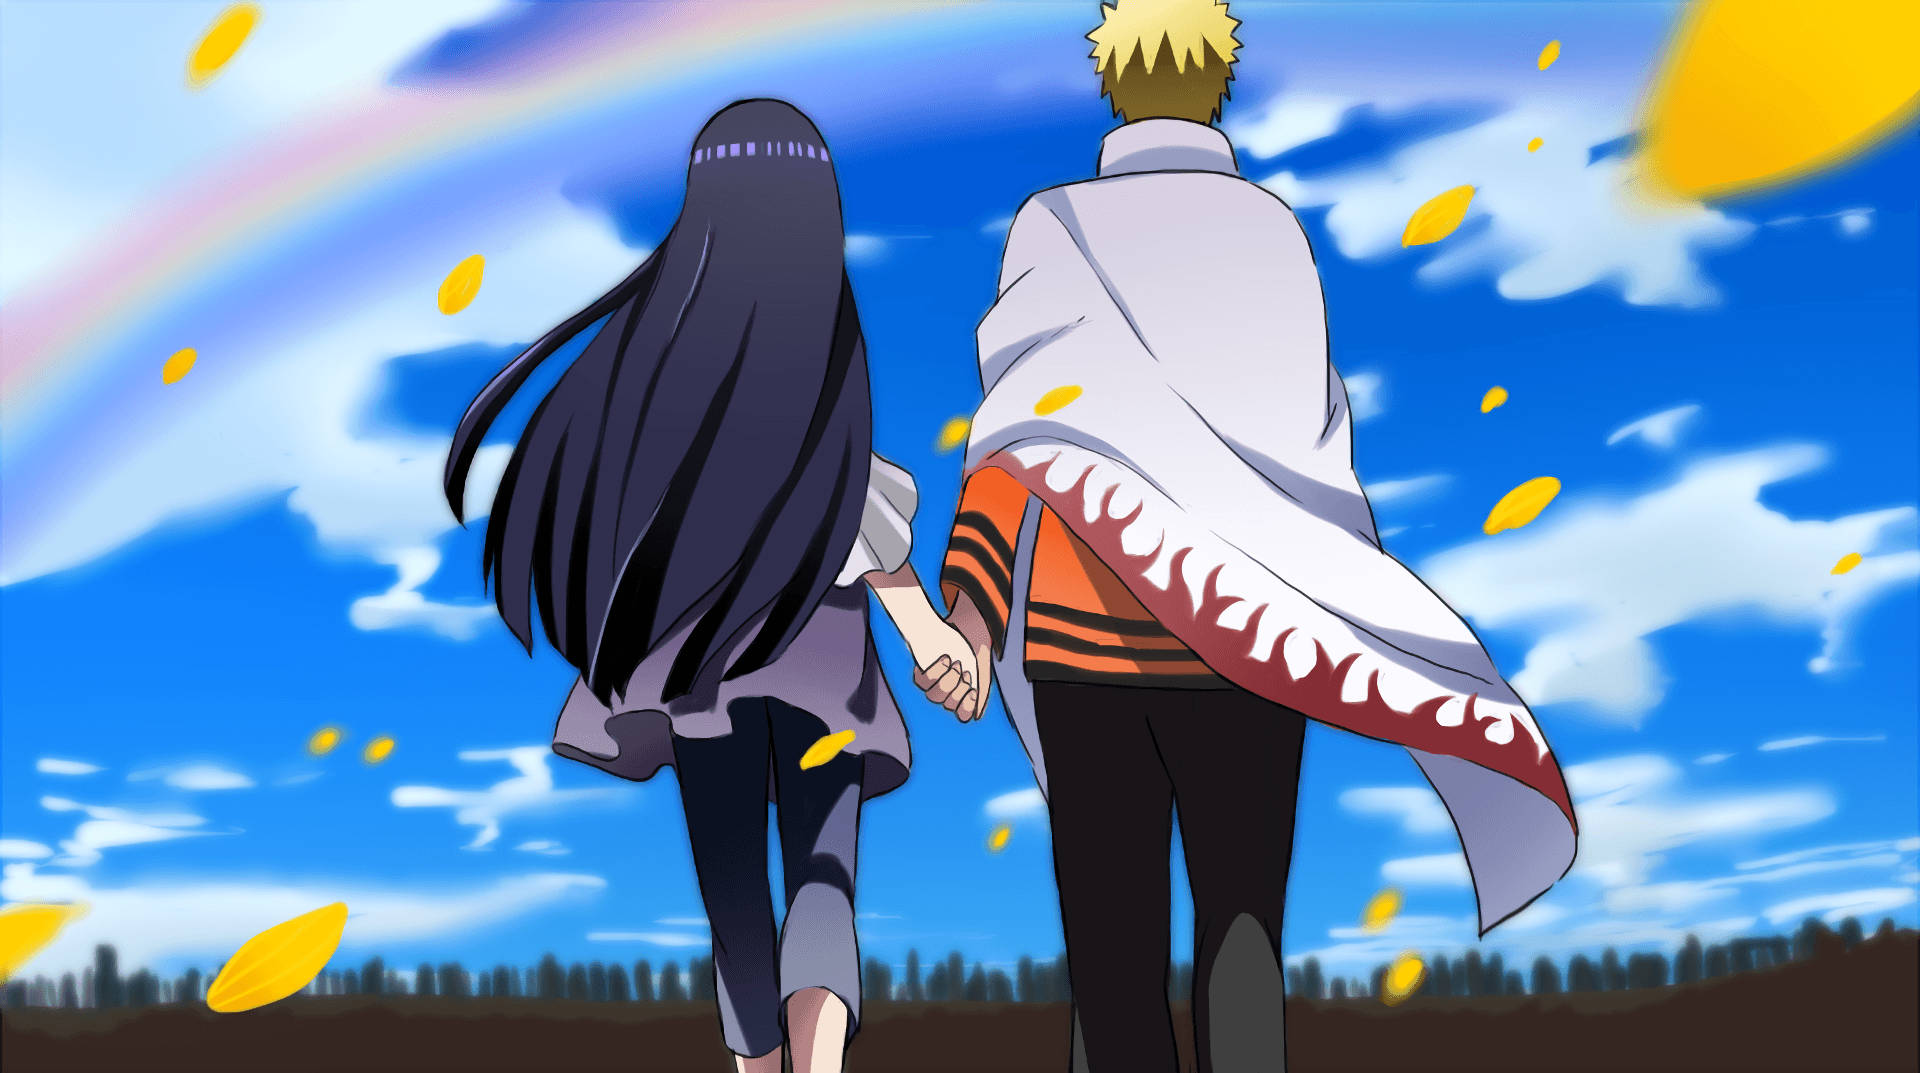 Caption: The Seventh Hokage - Uzumaki Naruto With Hinata Hyuga